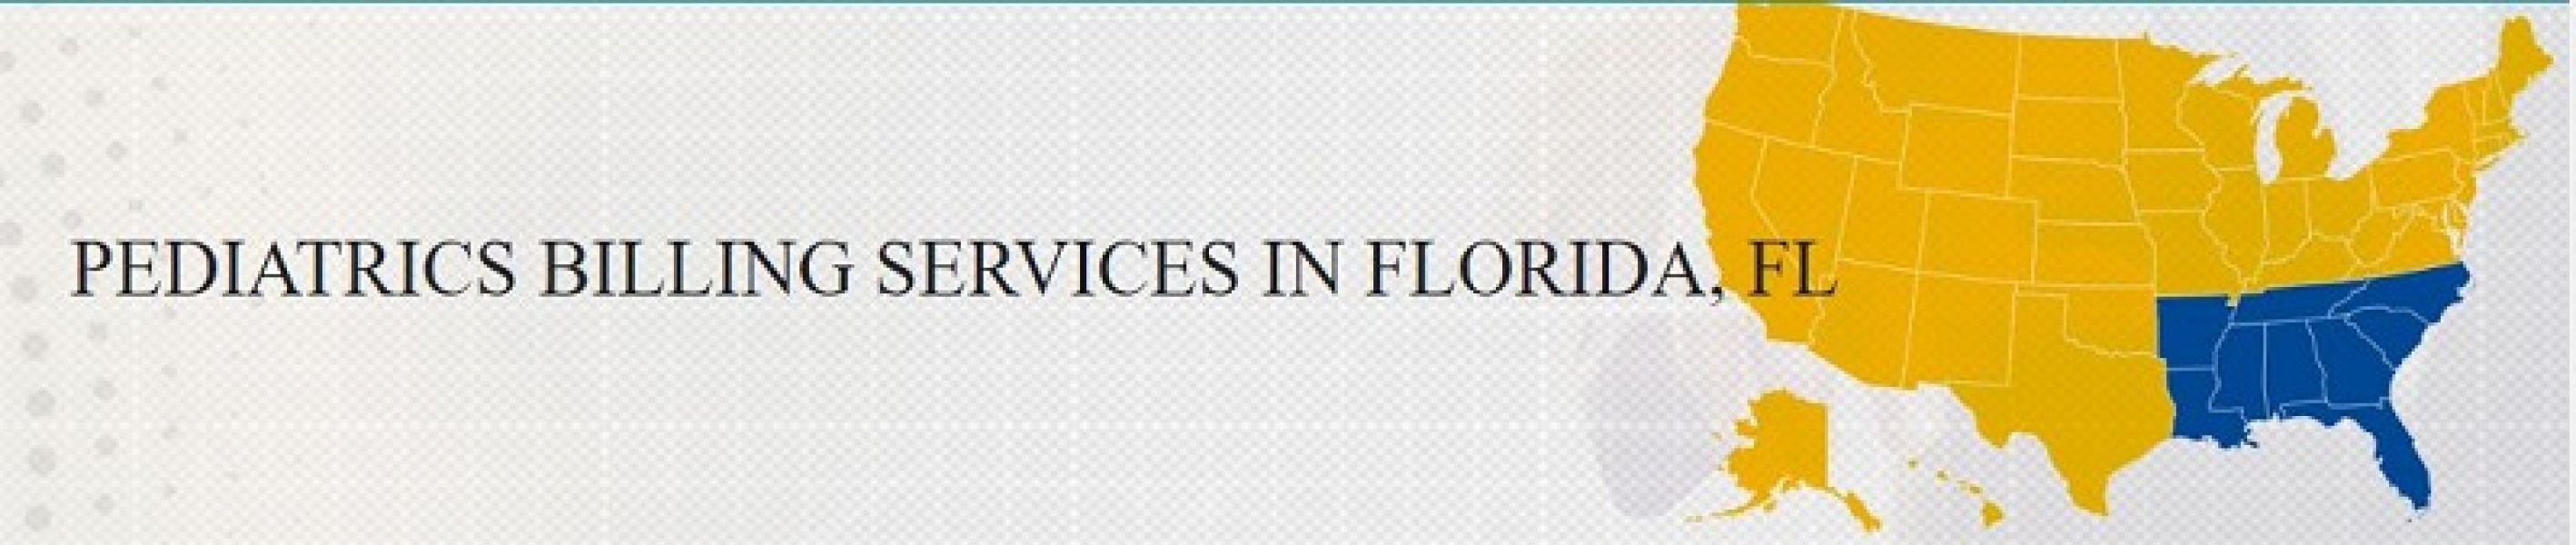 Pediatrics Billing Services for Florida, FL